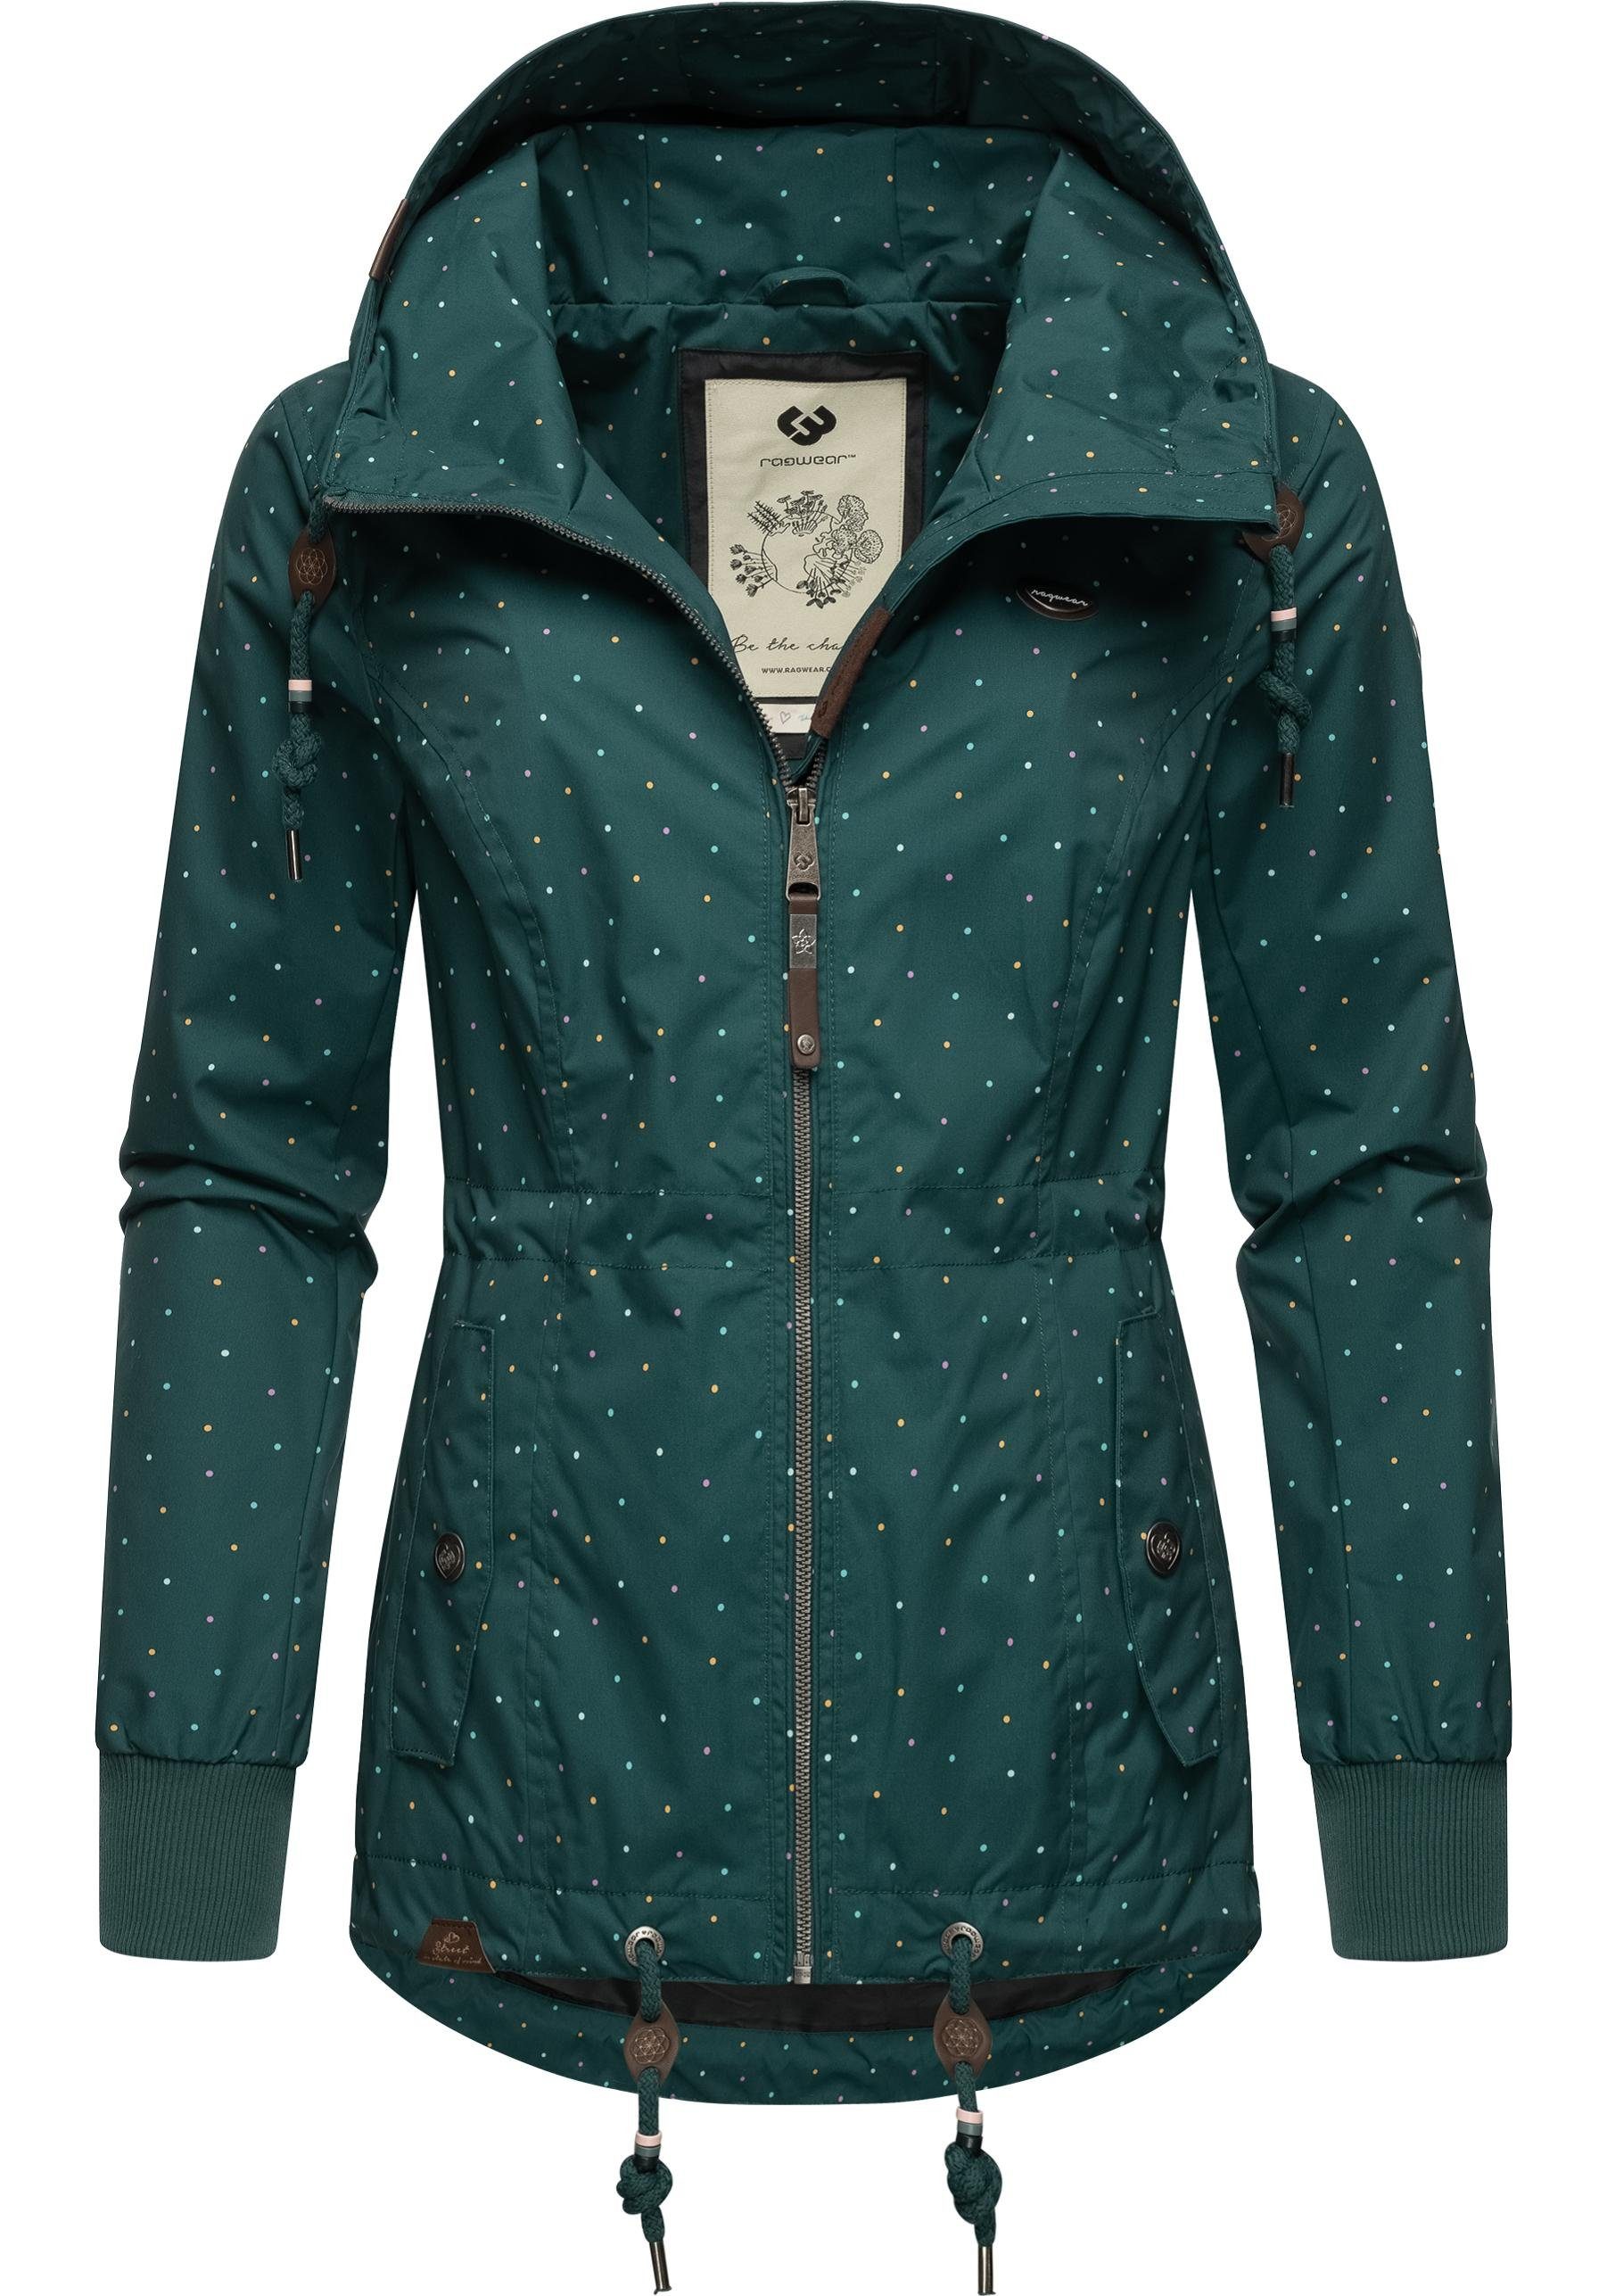 Ragwear Outdoorjacke Danka Dots stylische Übergangsjacke mit großer Kapuze dunkelgrün